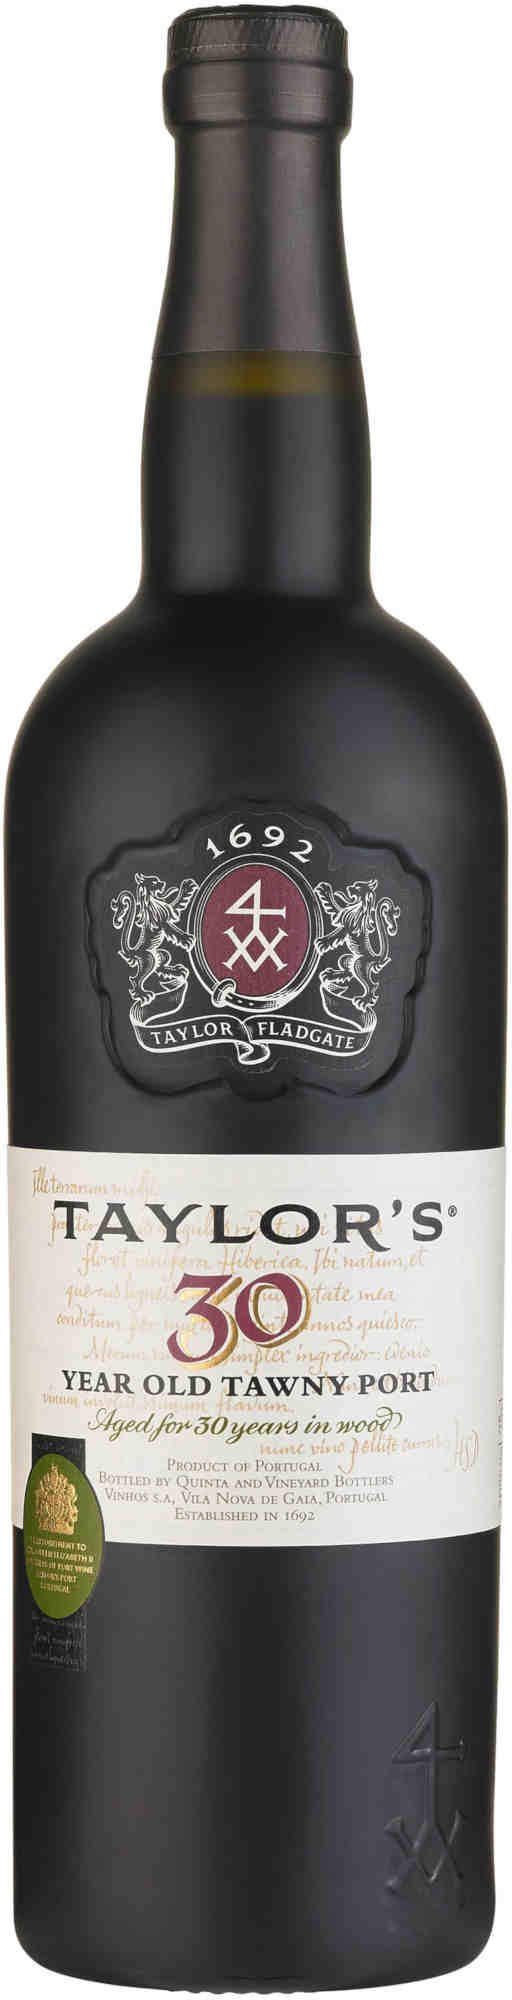 Taylors-30-Years-Tawny-Port